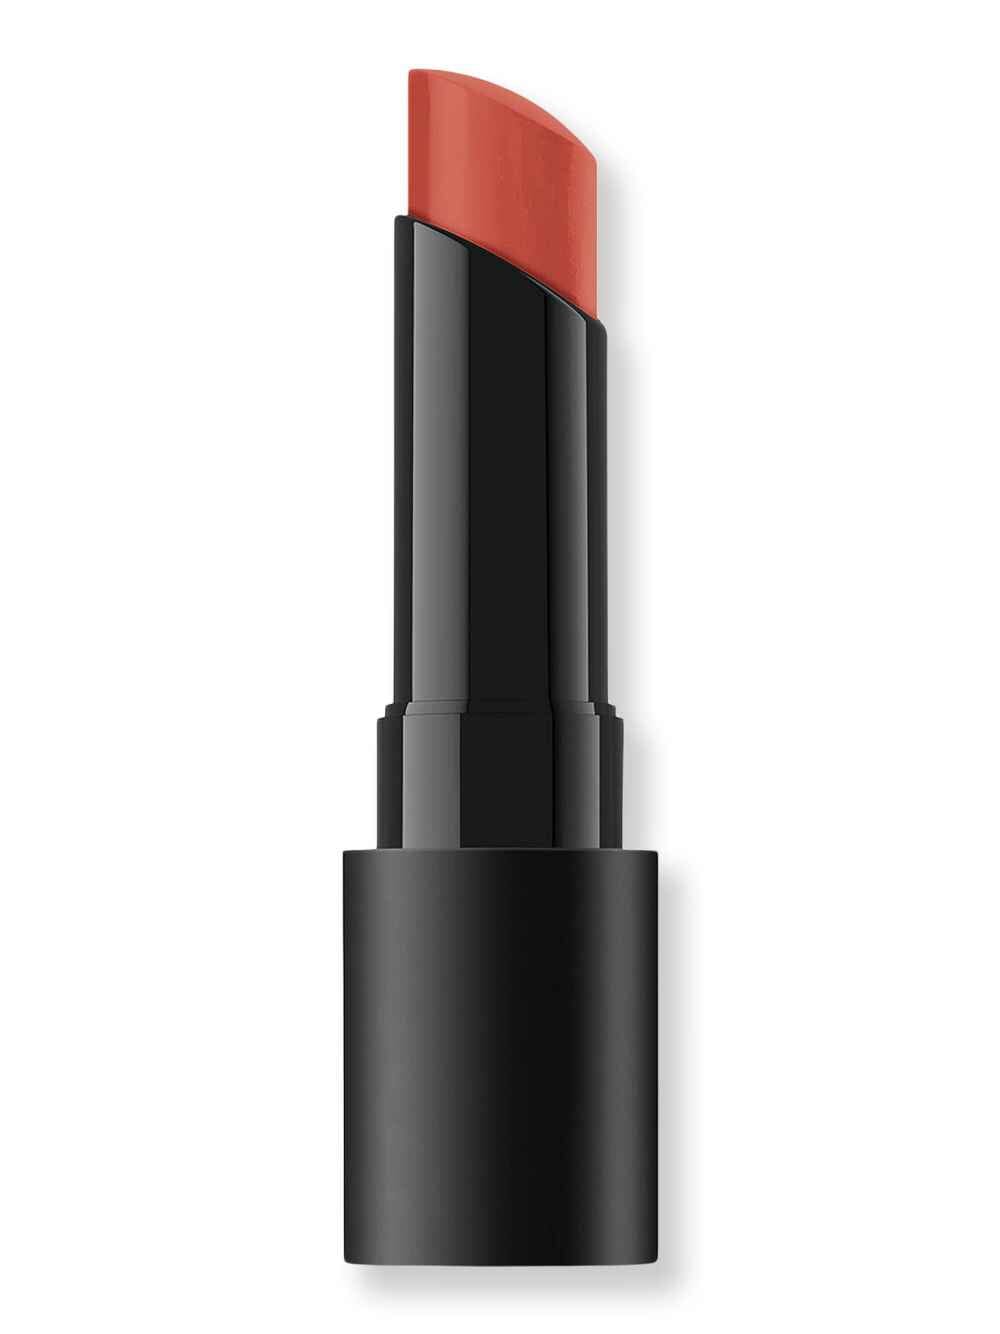 Bareminerals Bareminerals Gen Nude Radiant Lipstick Panko 0.12 oz3.5 g Lipstick, Lip Gloss, & Lip Liners 